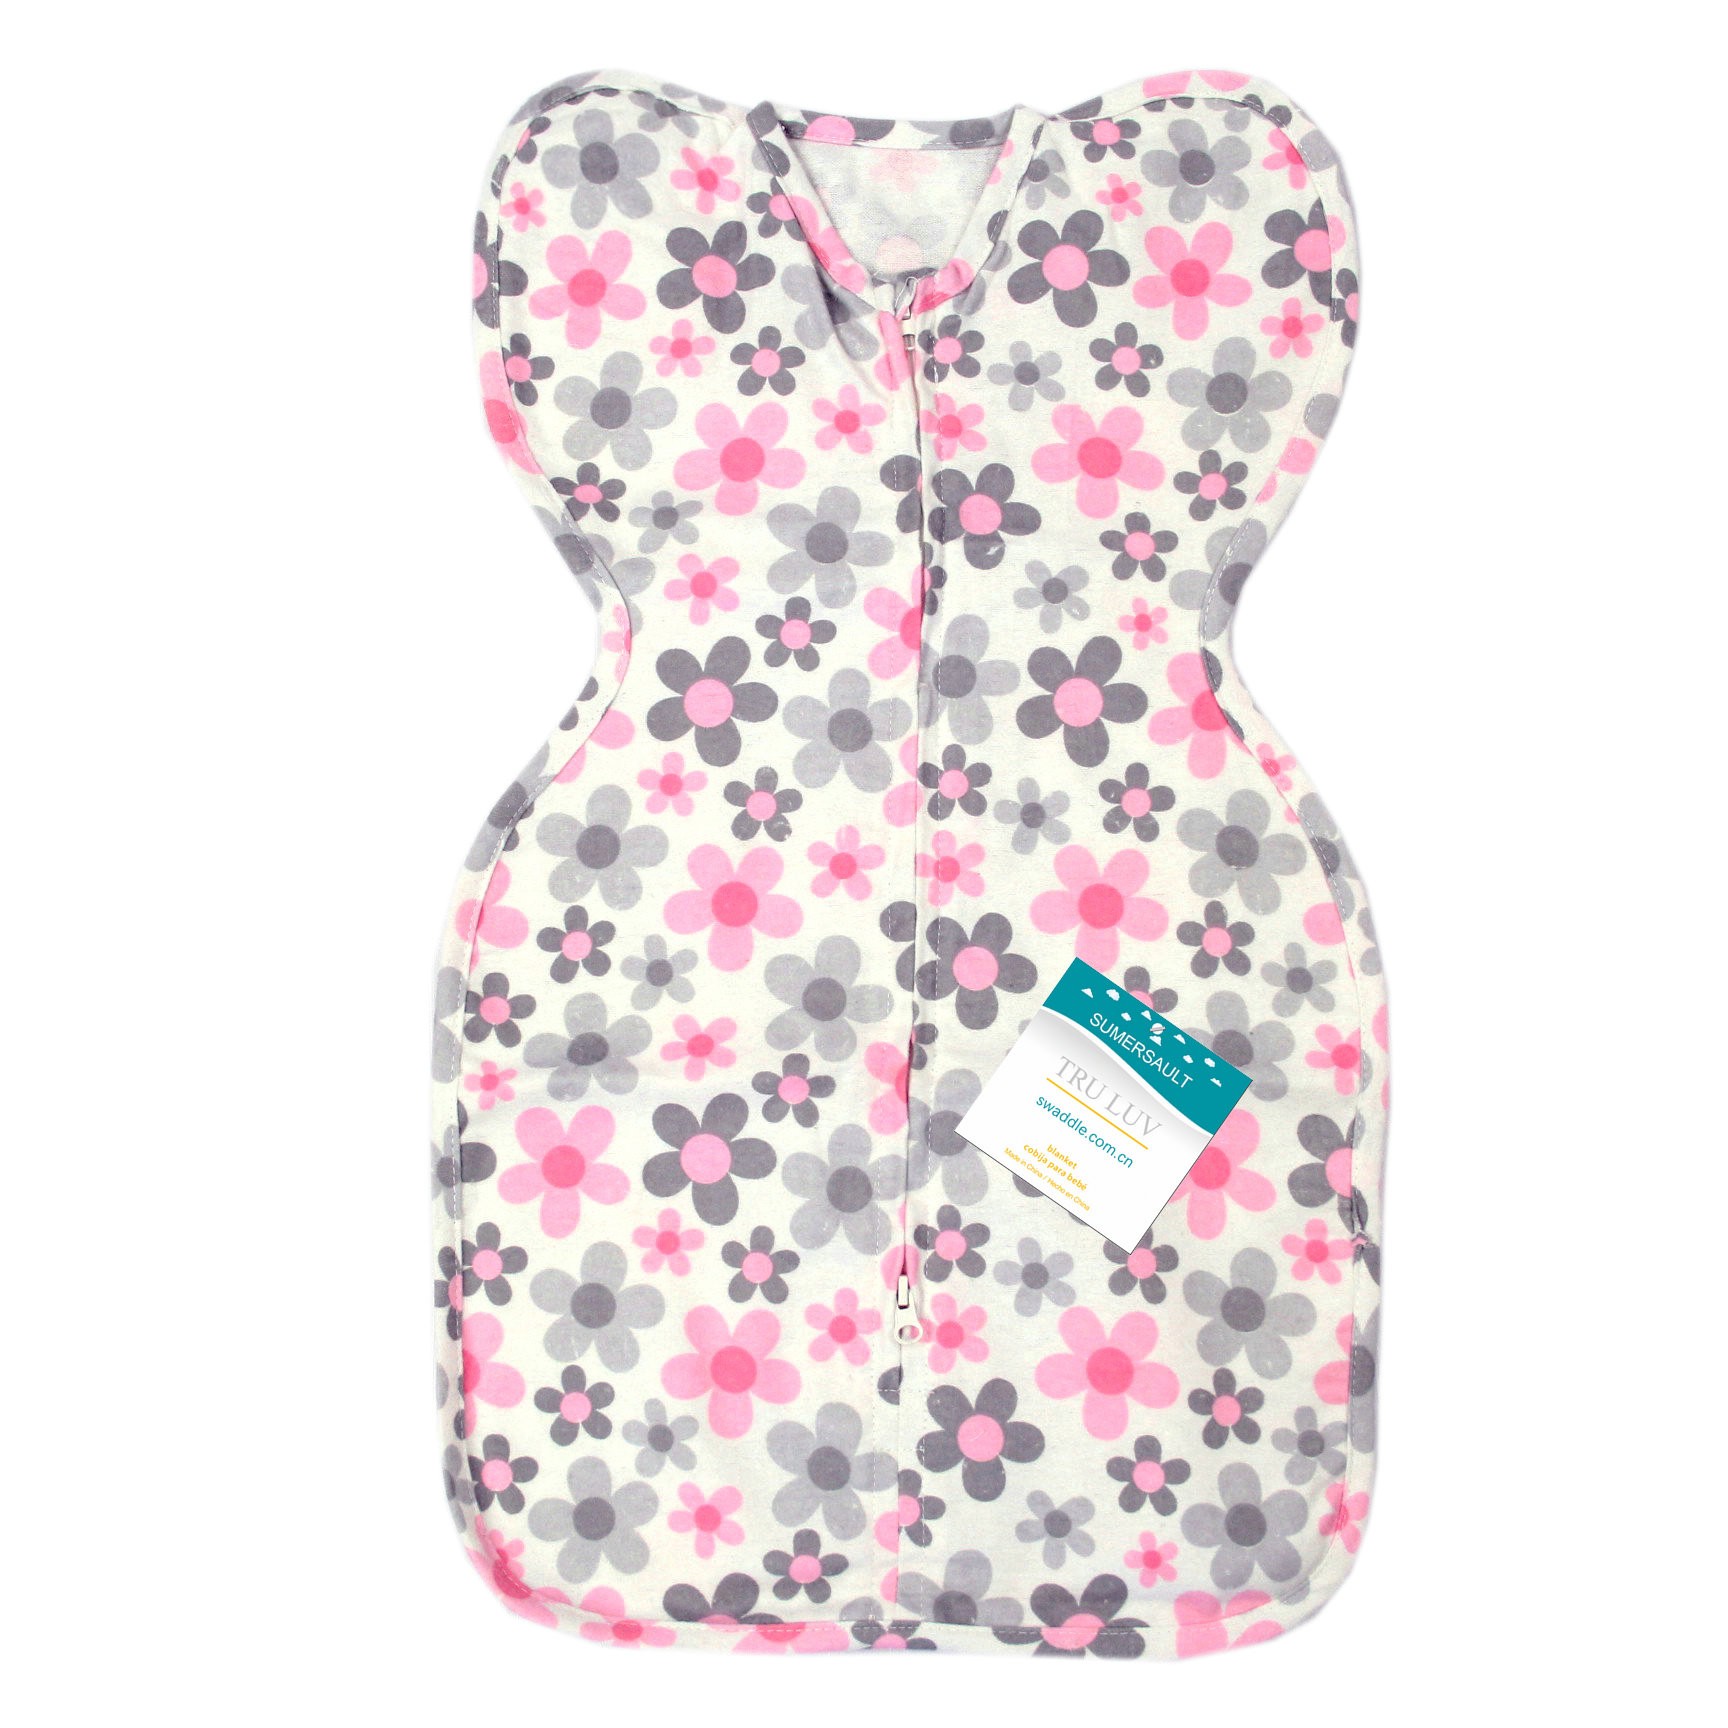 Winter Lightweight Breathable Thick Warm soft Baby sleeping bag Kids Infant sleep 